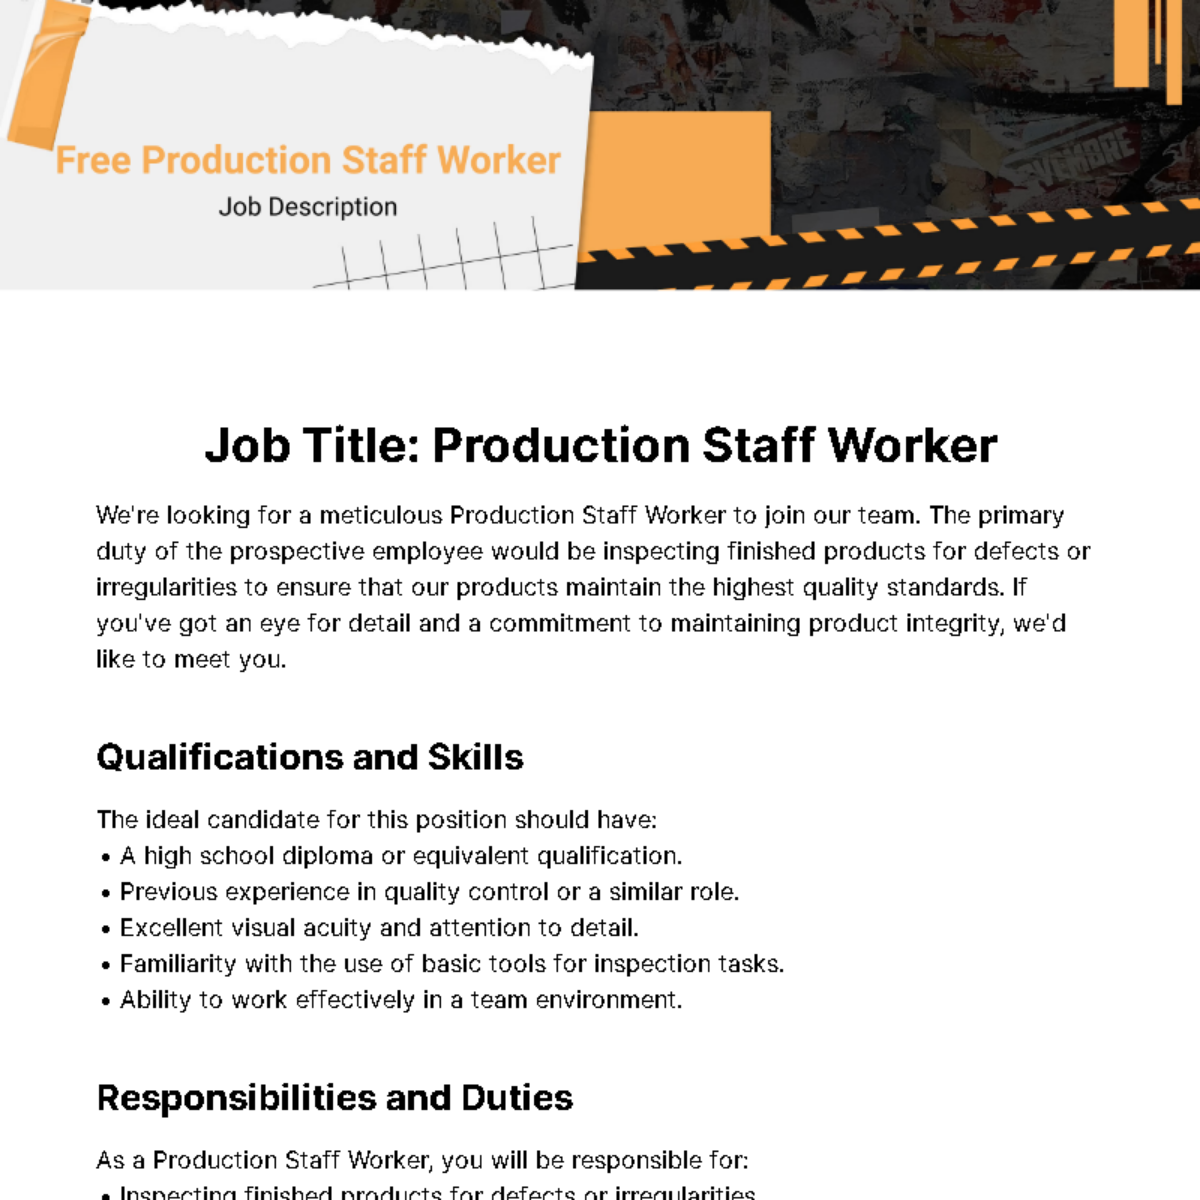 Free Production Staff Worker Job Description Template